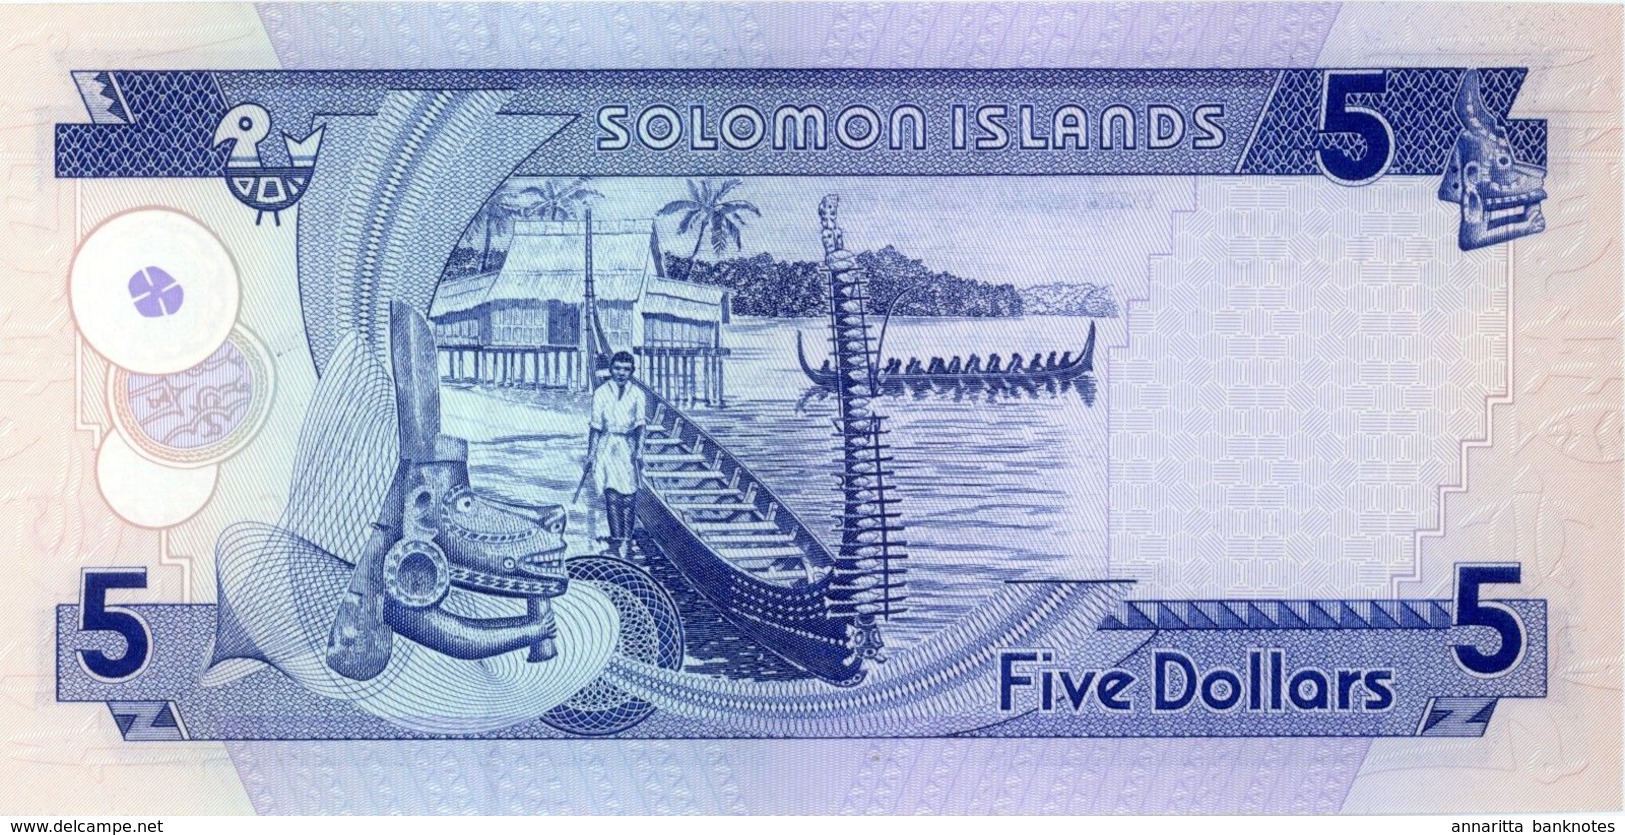 Solomon Islands 5 Dollars ND (1997), UNC, P-19a, SB209a RARE! Low Serial - Solomon Islands